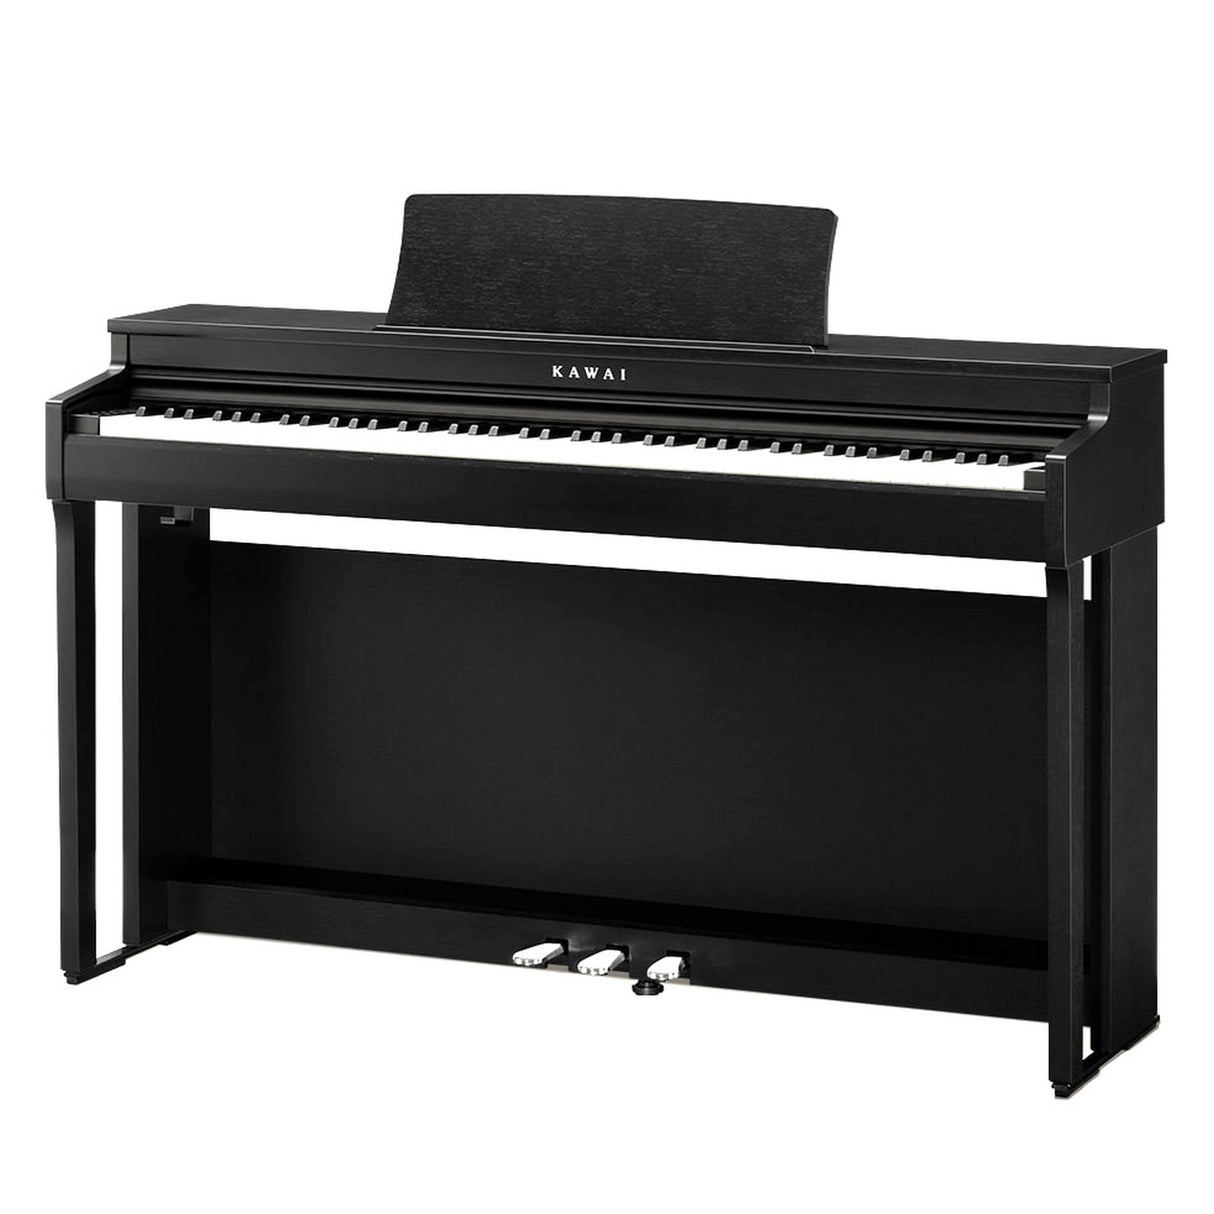 Kawai CN201 88-Key Digital Piano with Bench, Satin Black